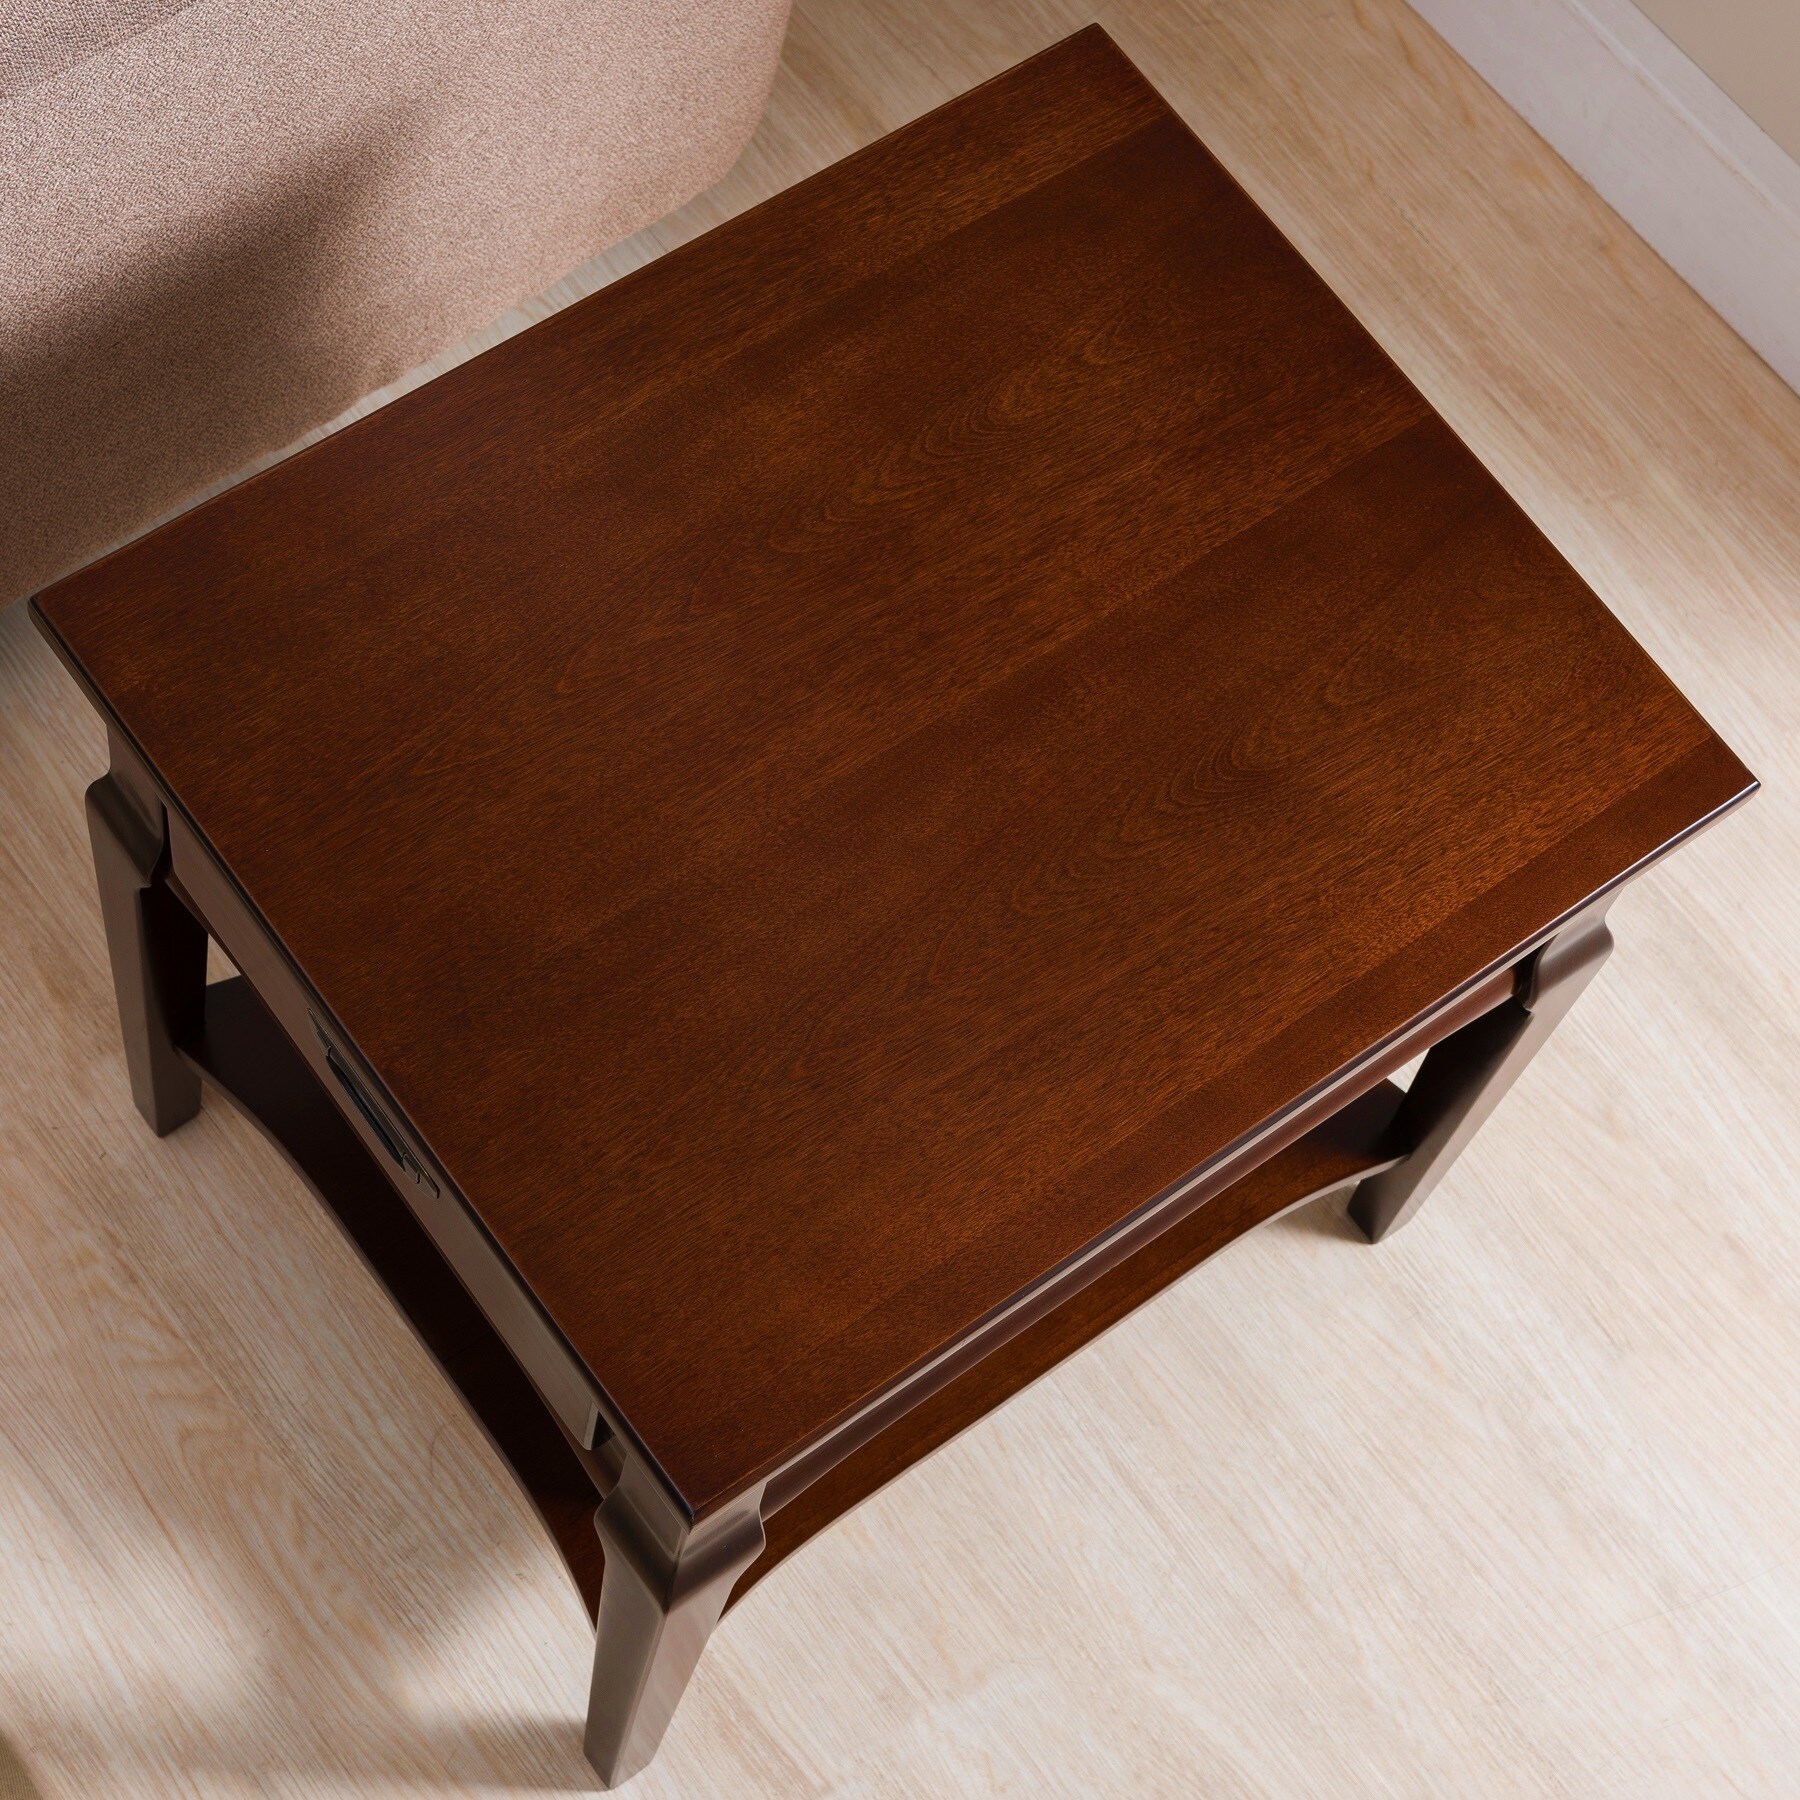 KD Furnishings Brown Wood 1-drawer End Table